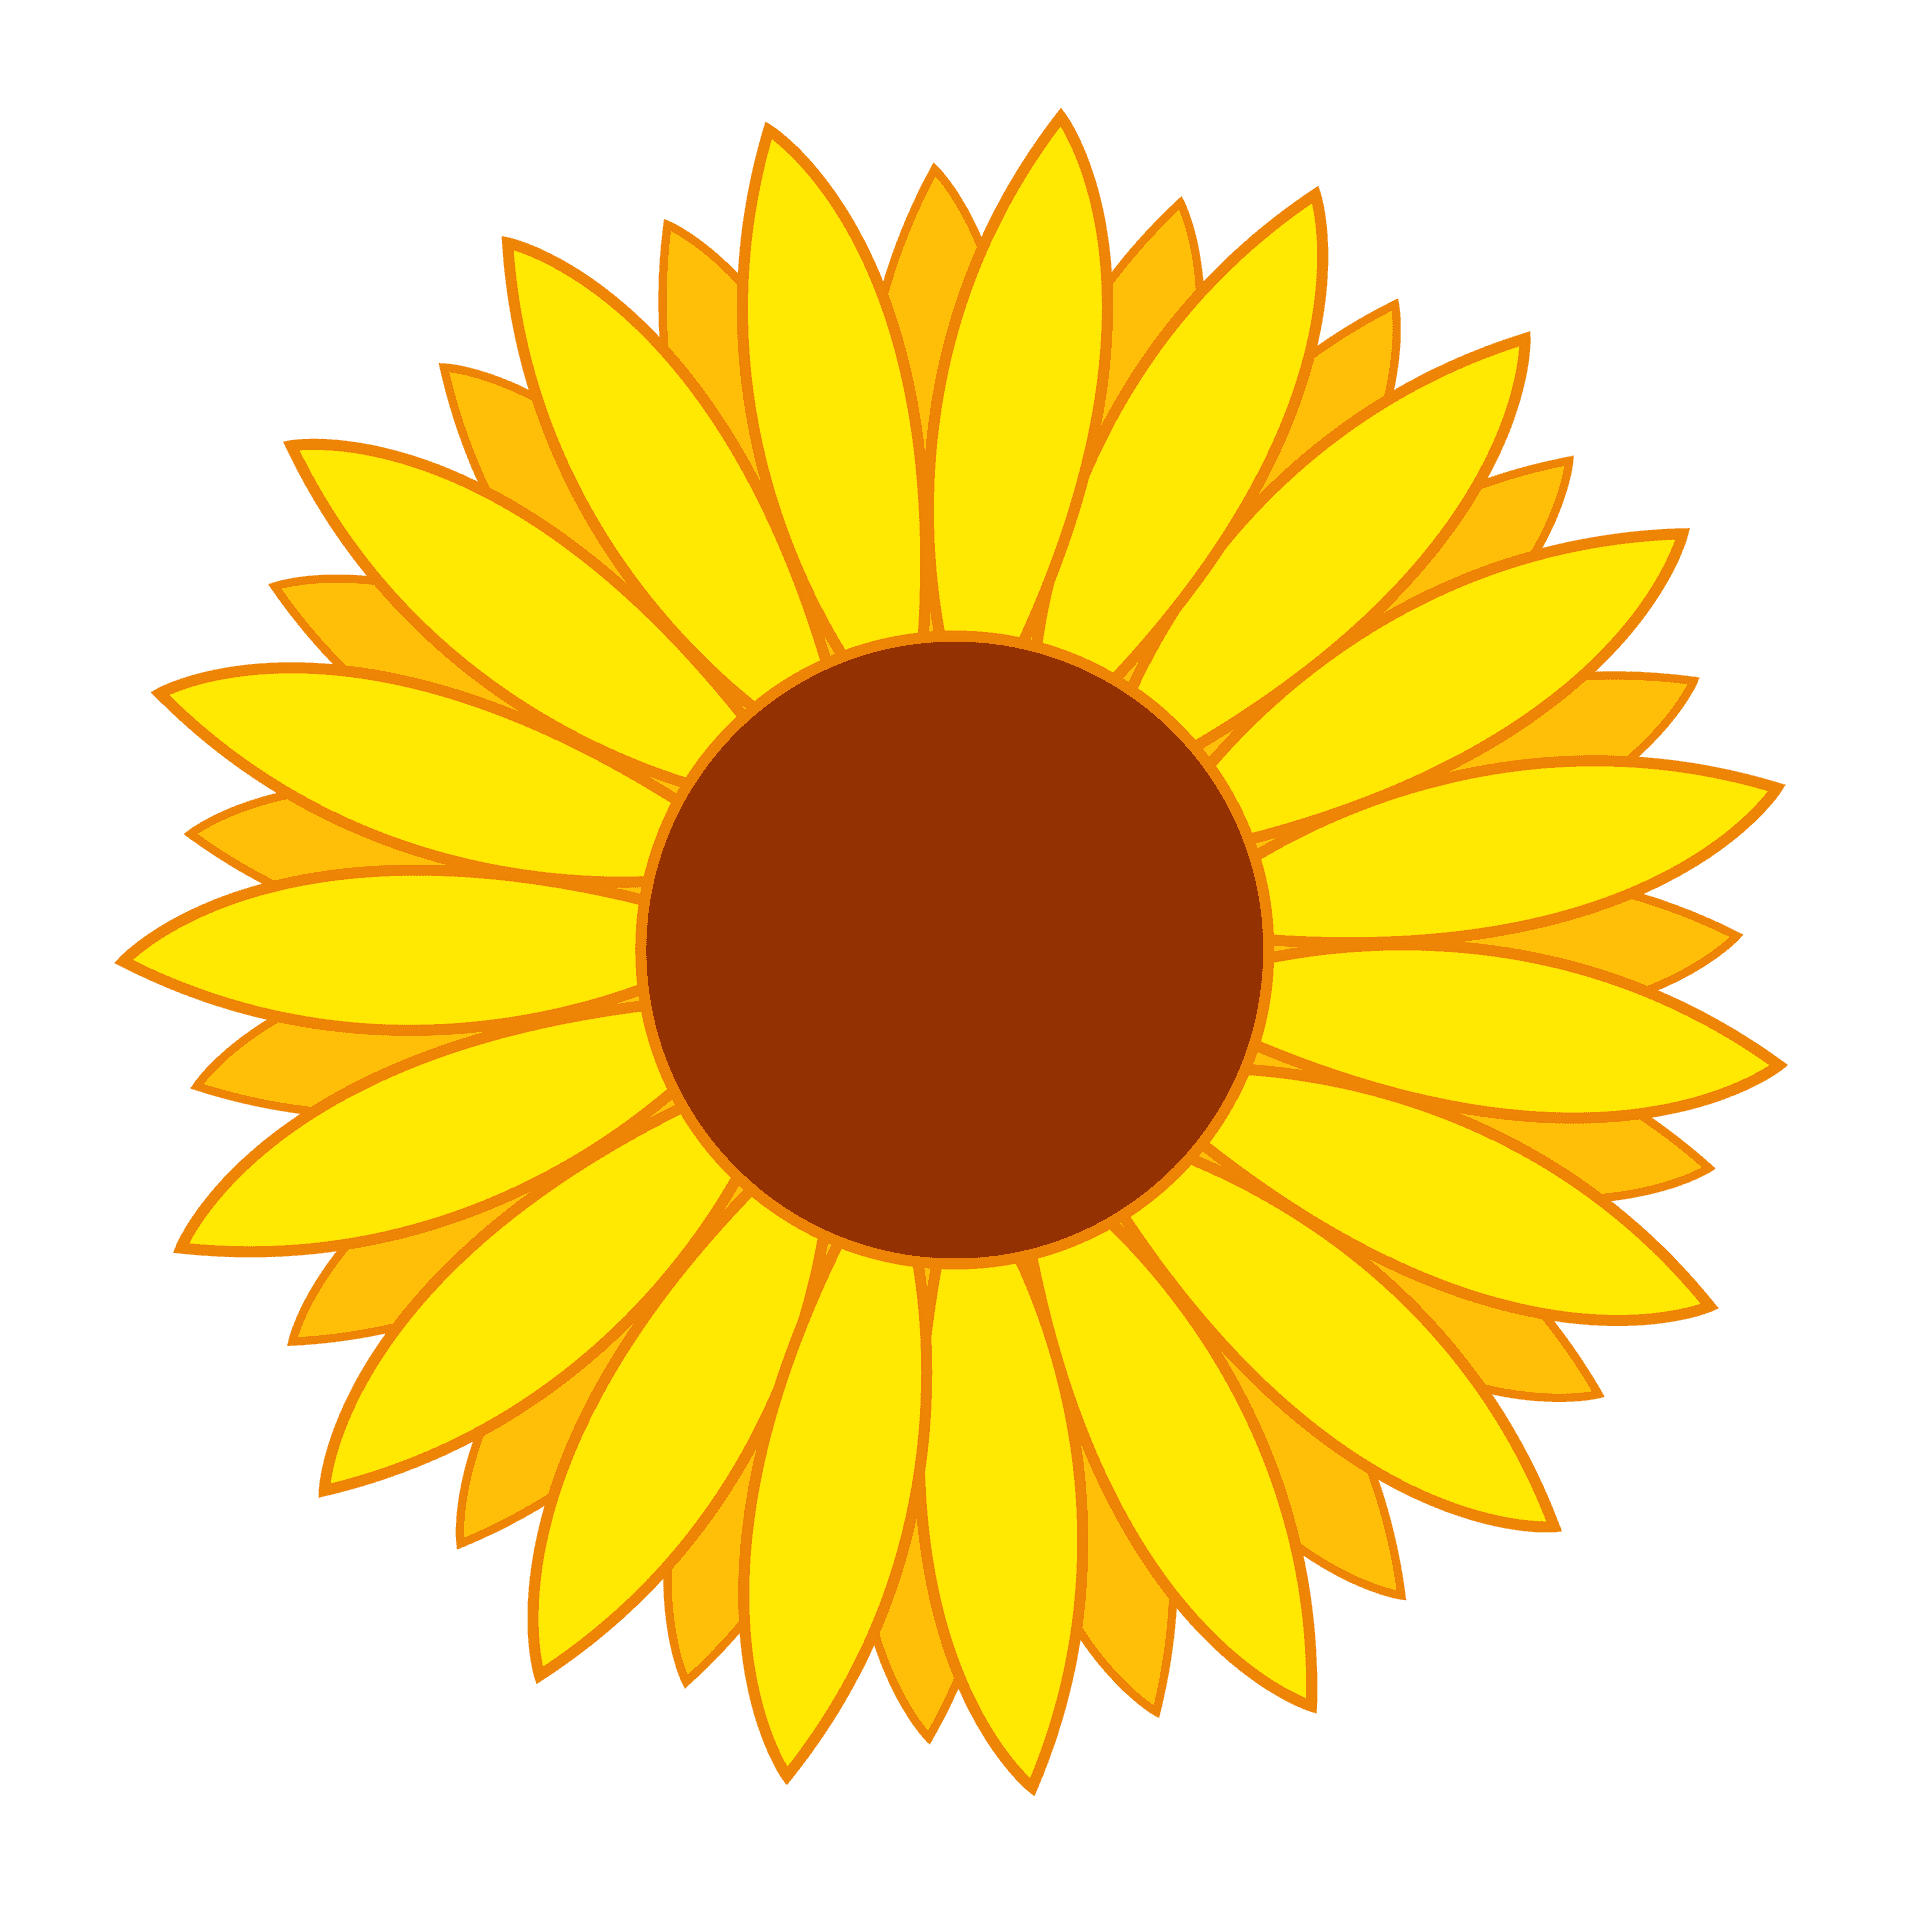 Stylized Sunflower Illustration PNG